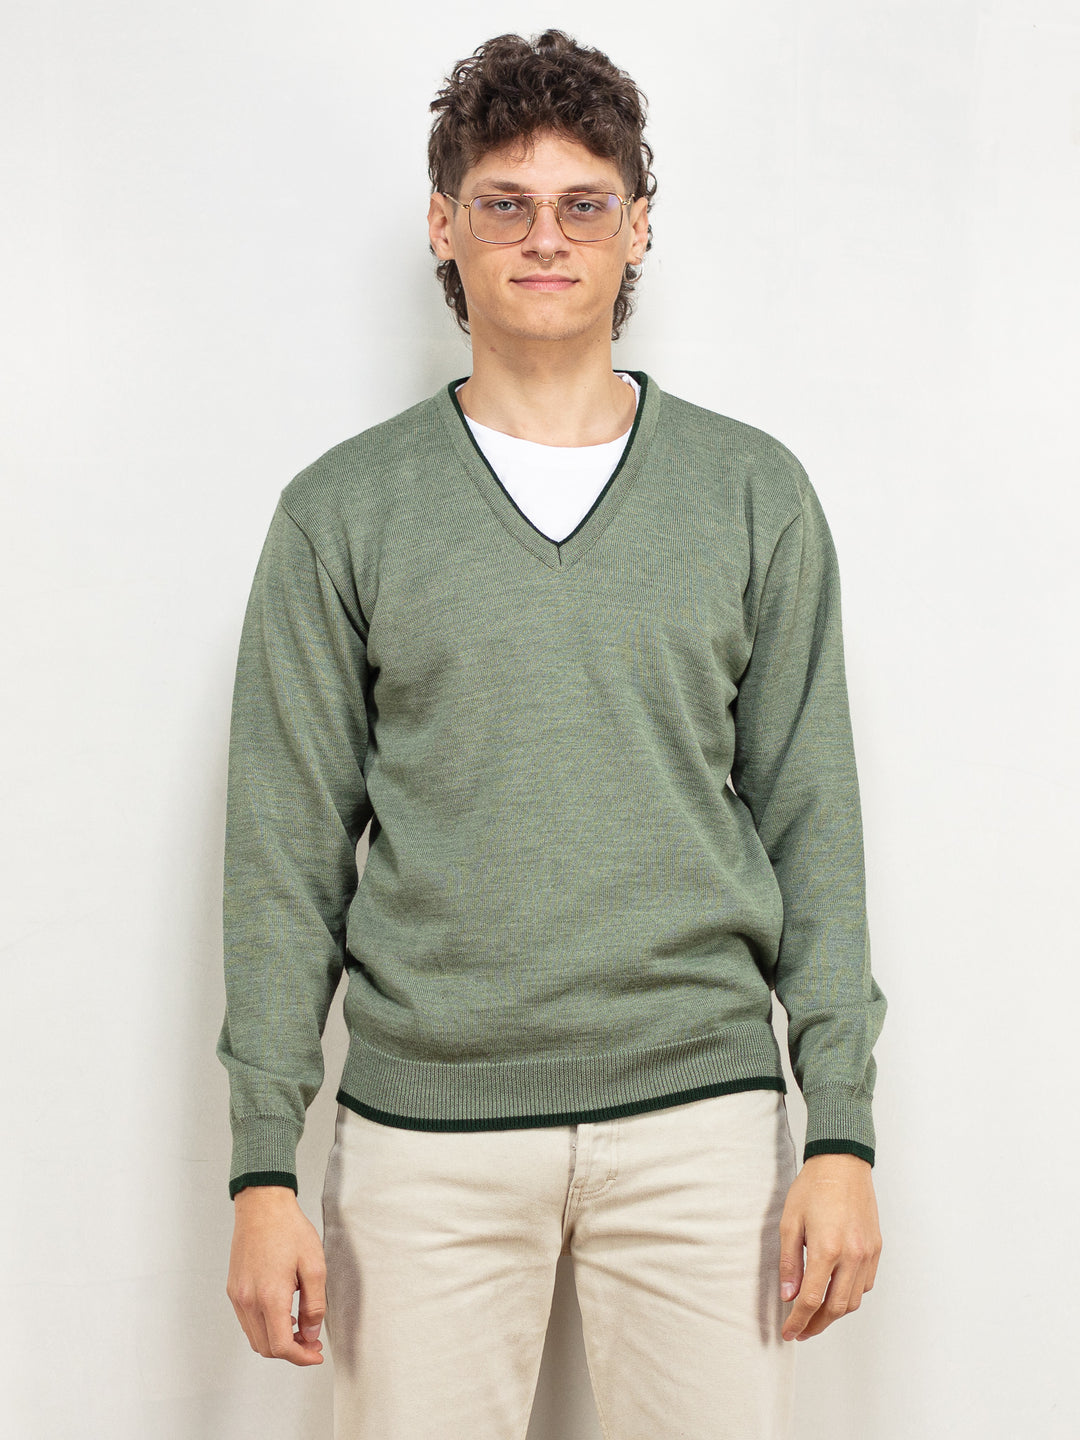 Men Vintage Sweater 90's green solid pattern men sweater sport golf v neck vintage men minimalist casual sports sweater size small S